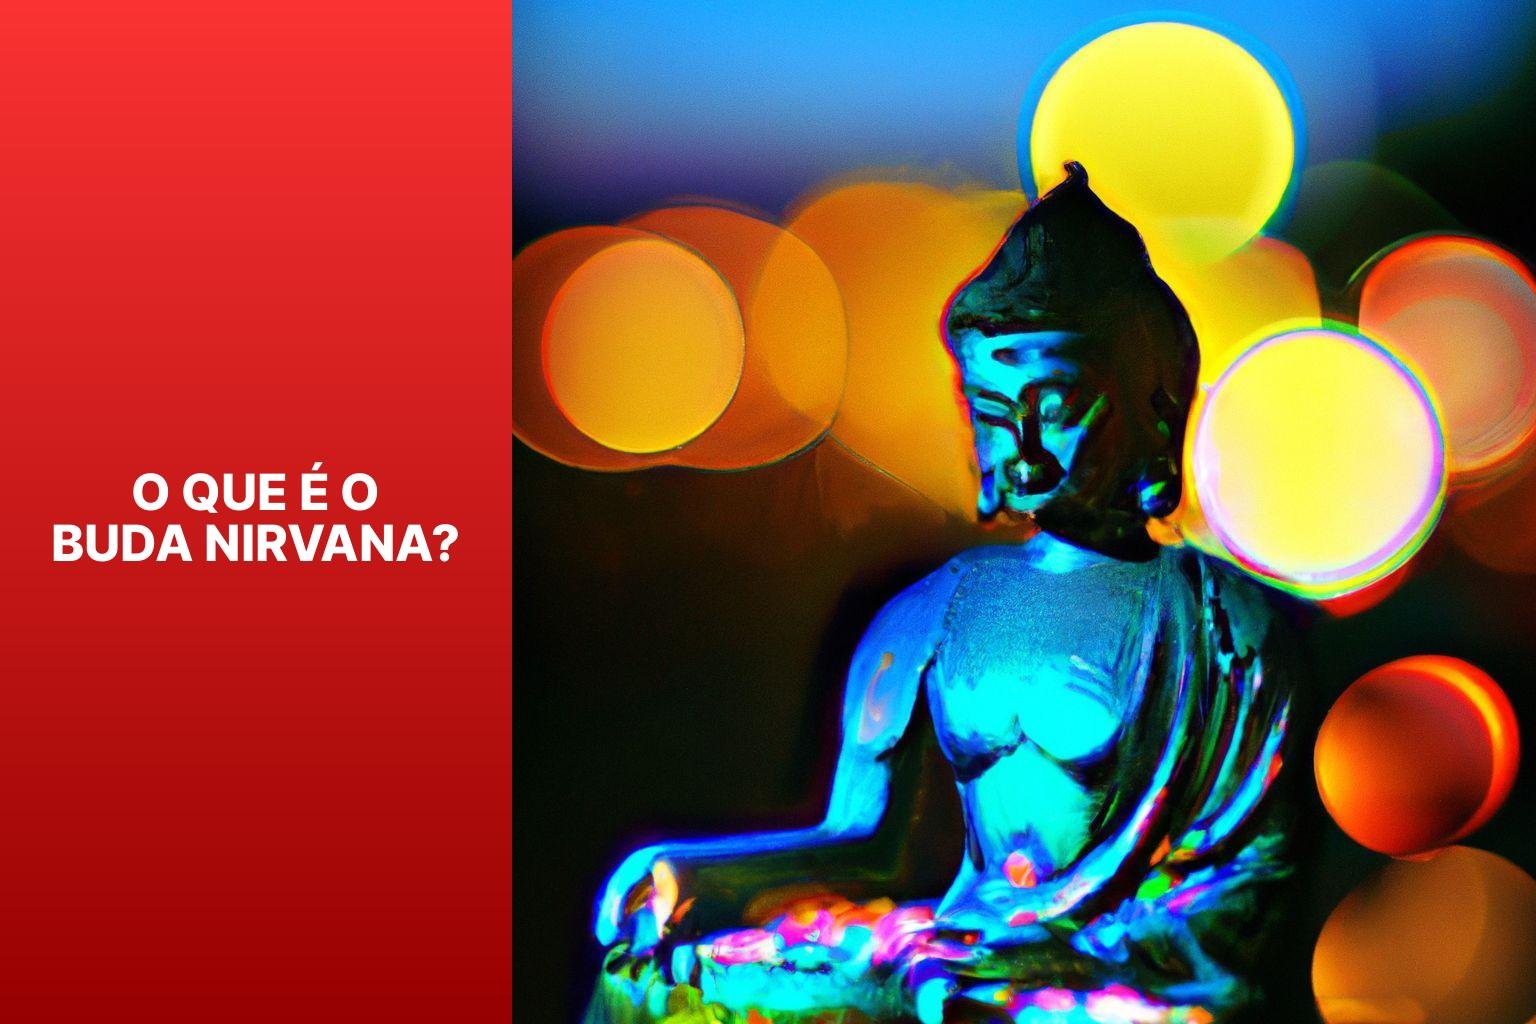 O Que é o Buda Nirvana? - Buda Nirvana 